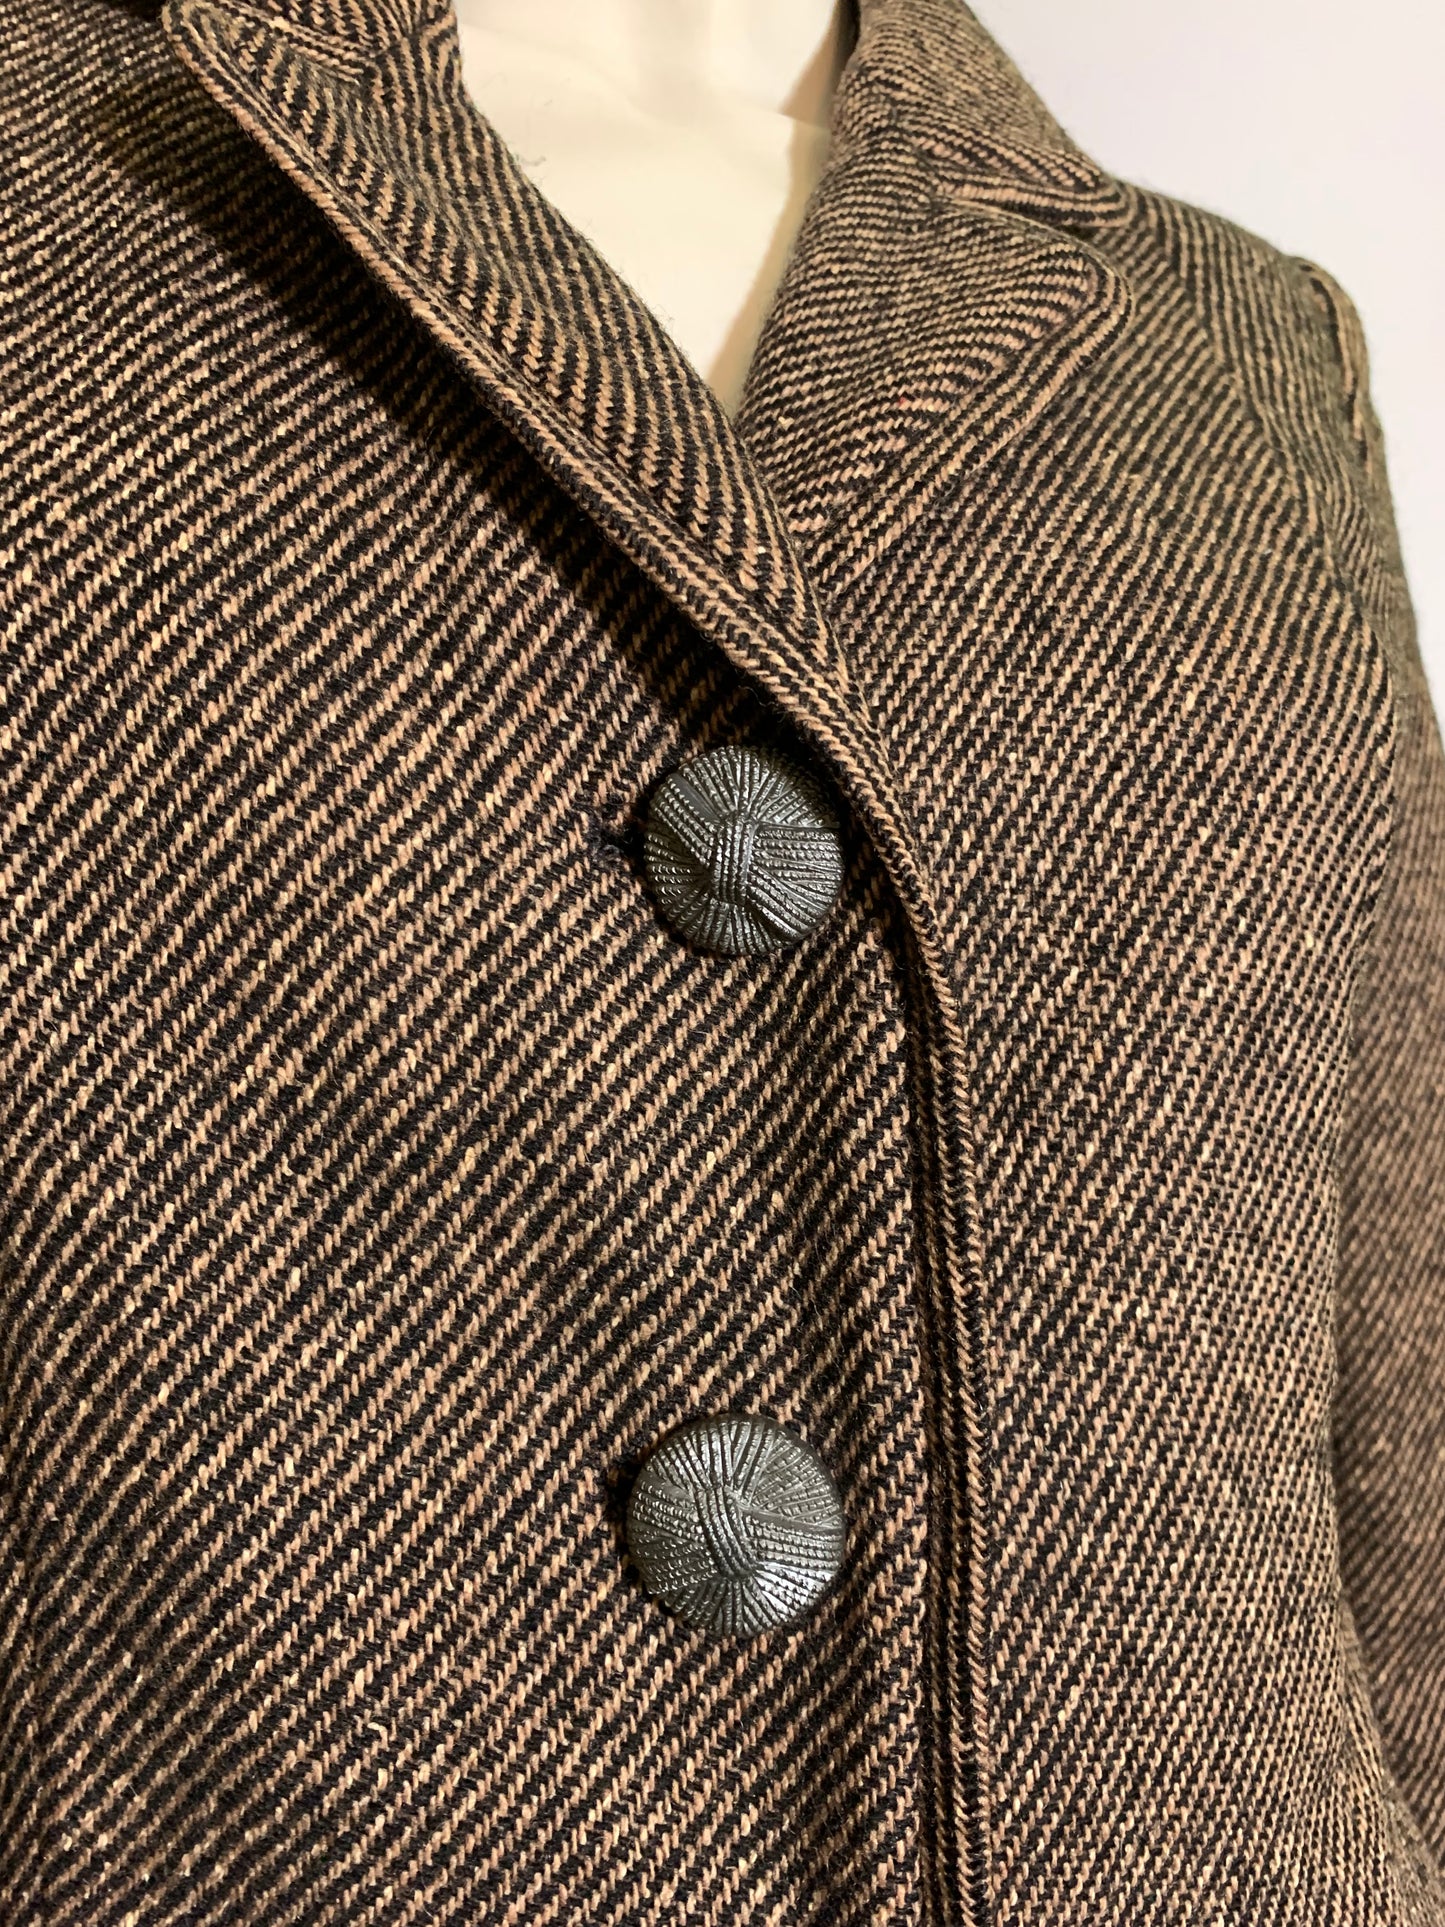 Textured Bark Brown Wool Cropped Jacket circa 1960s